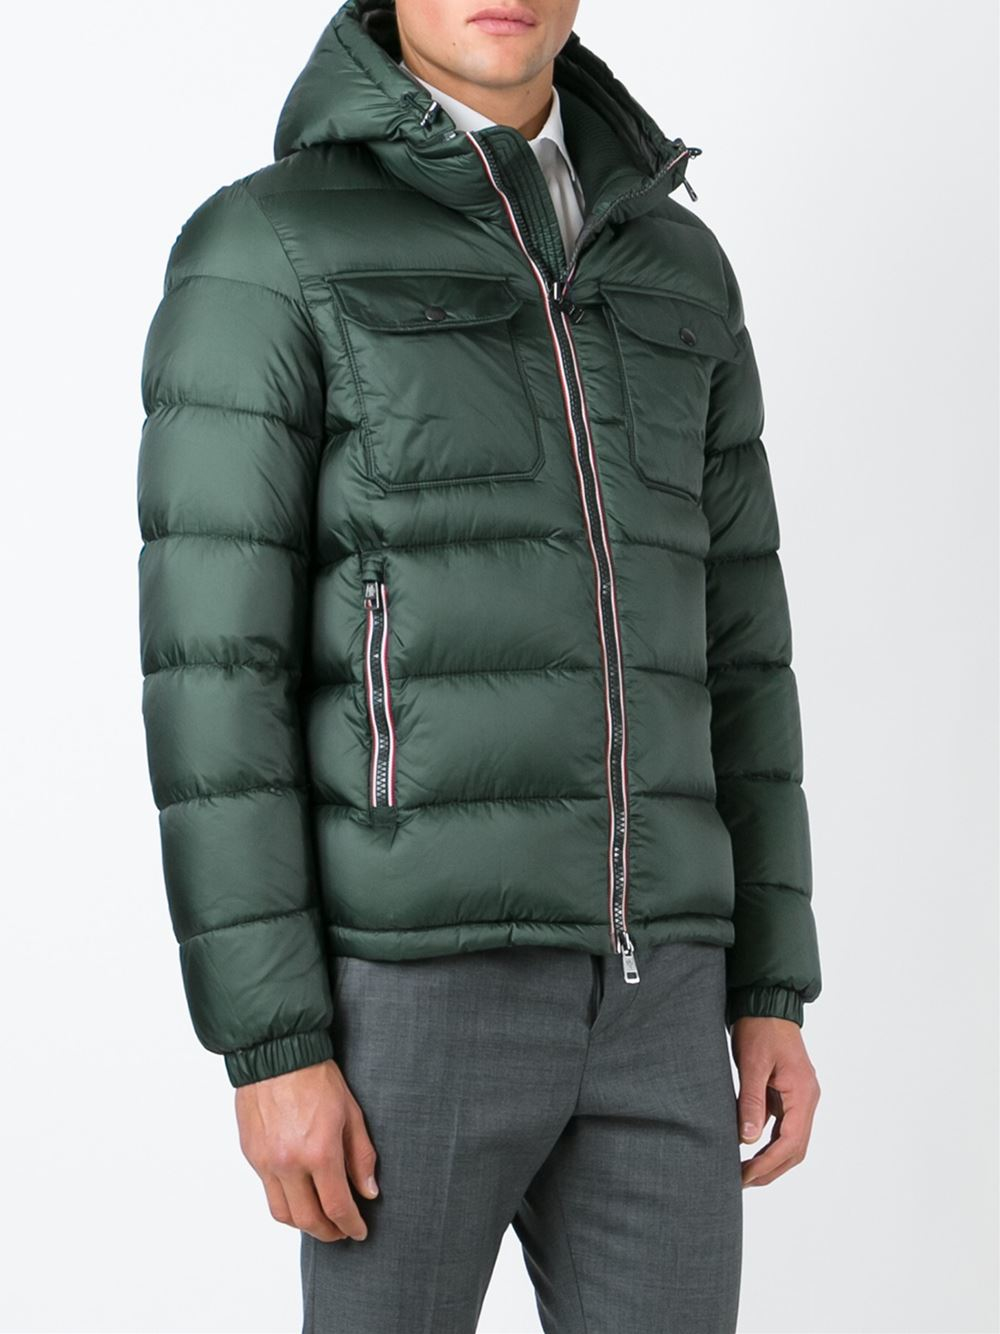 moncler jacket green - 59% OFF 